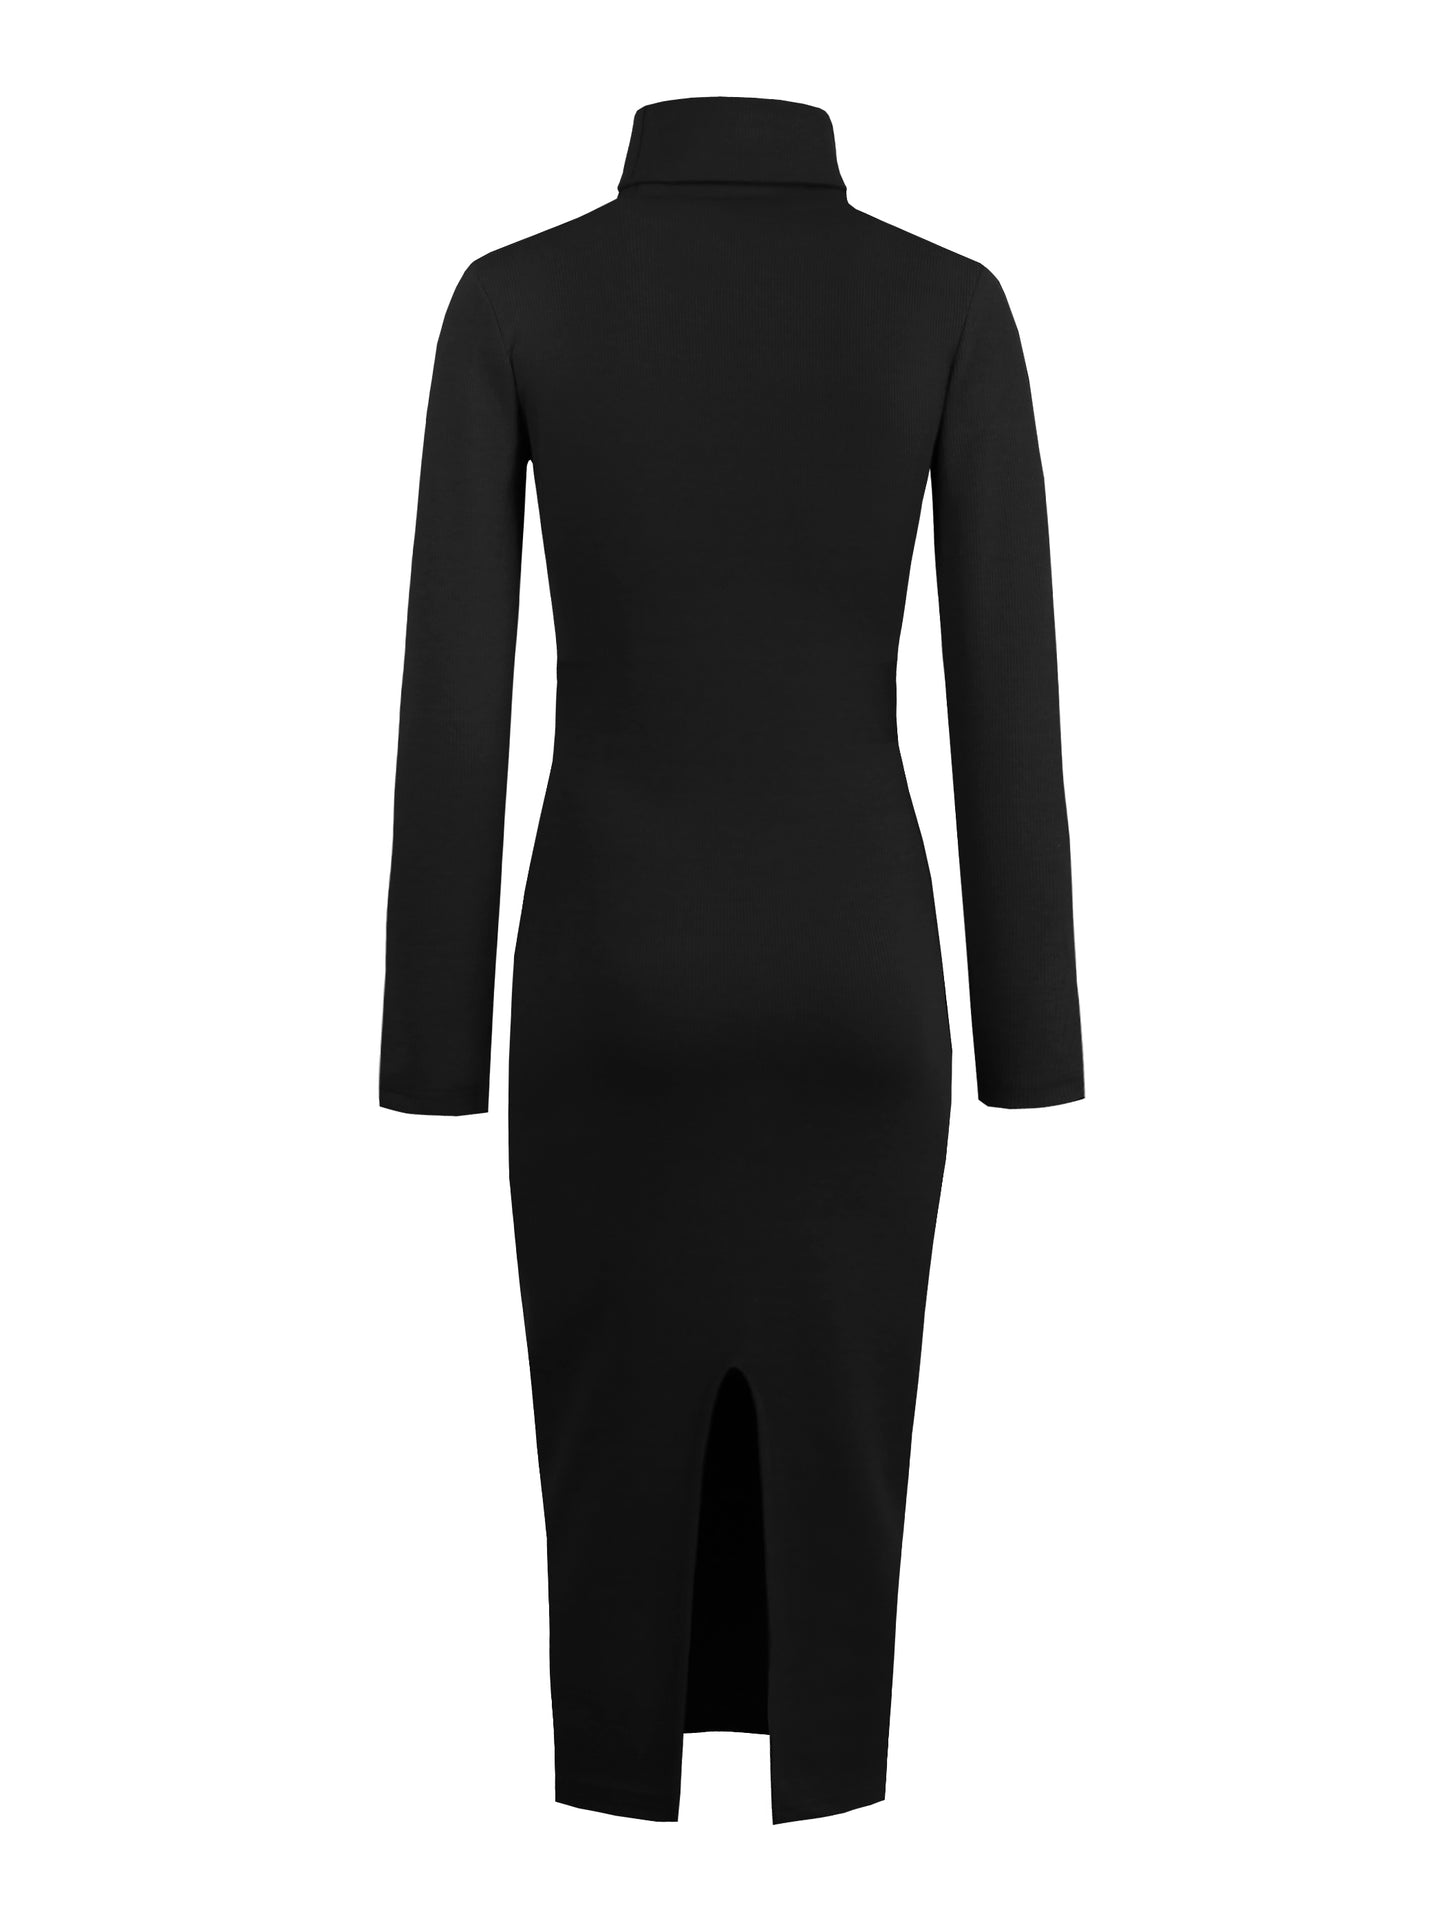 Mid-Calf Turtleneck Long Sleeve Pullover Women's Dress